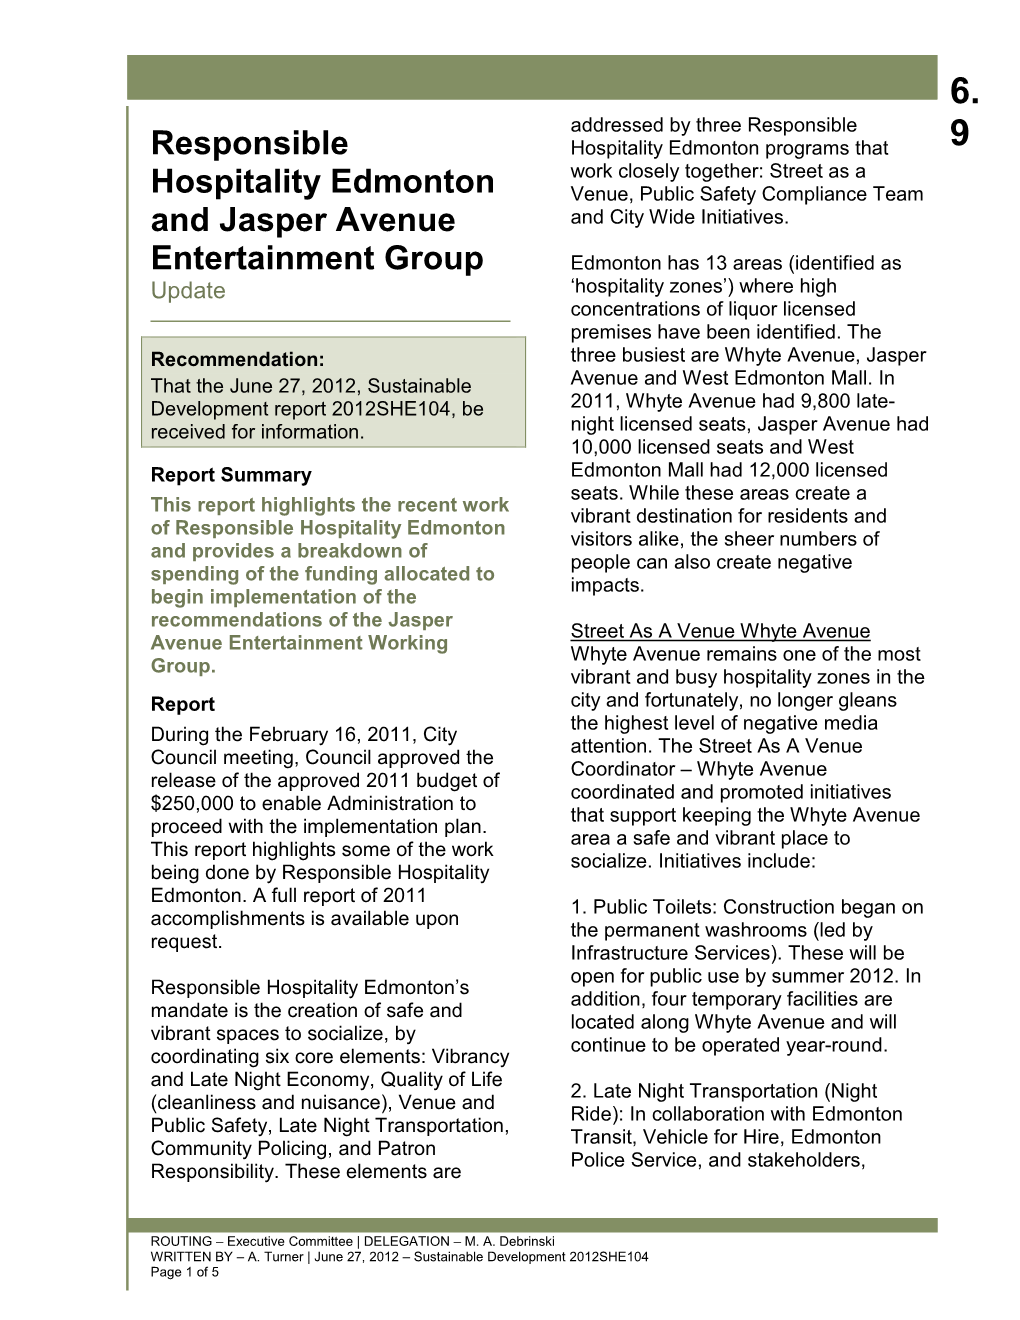 Responsible Hospitality Edmonton and Jasper Avenue Entertainment Group - Update